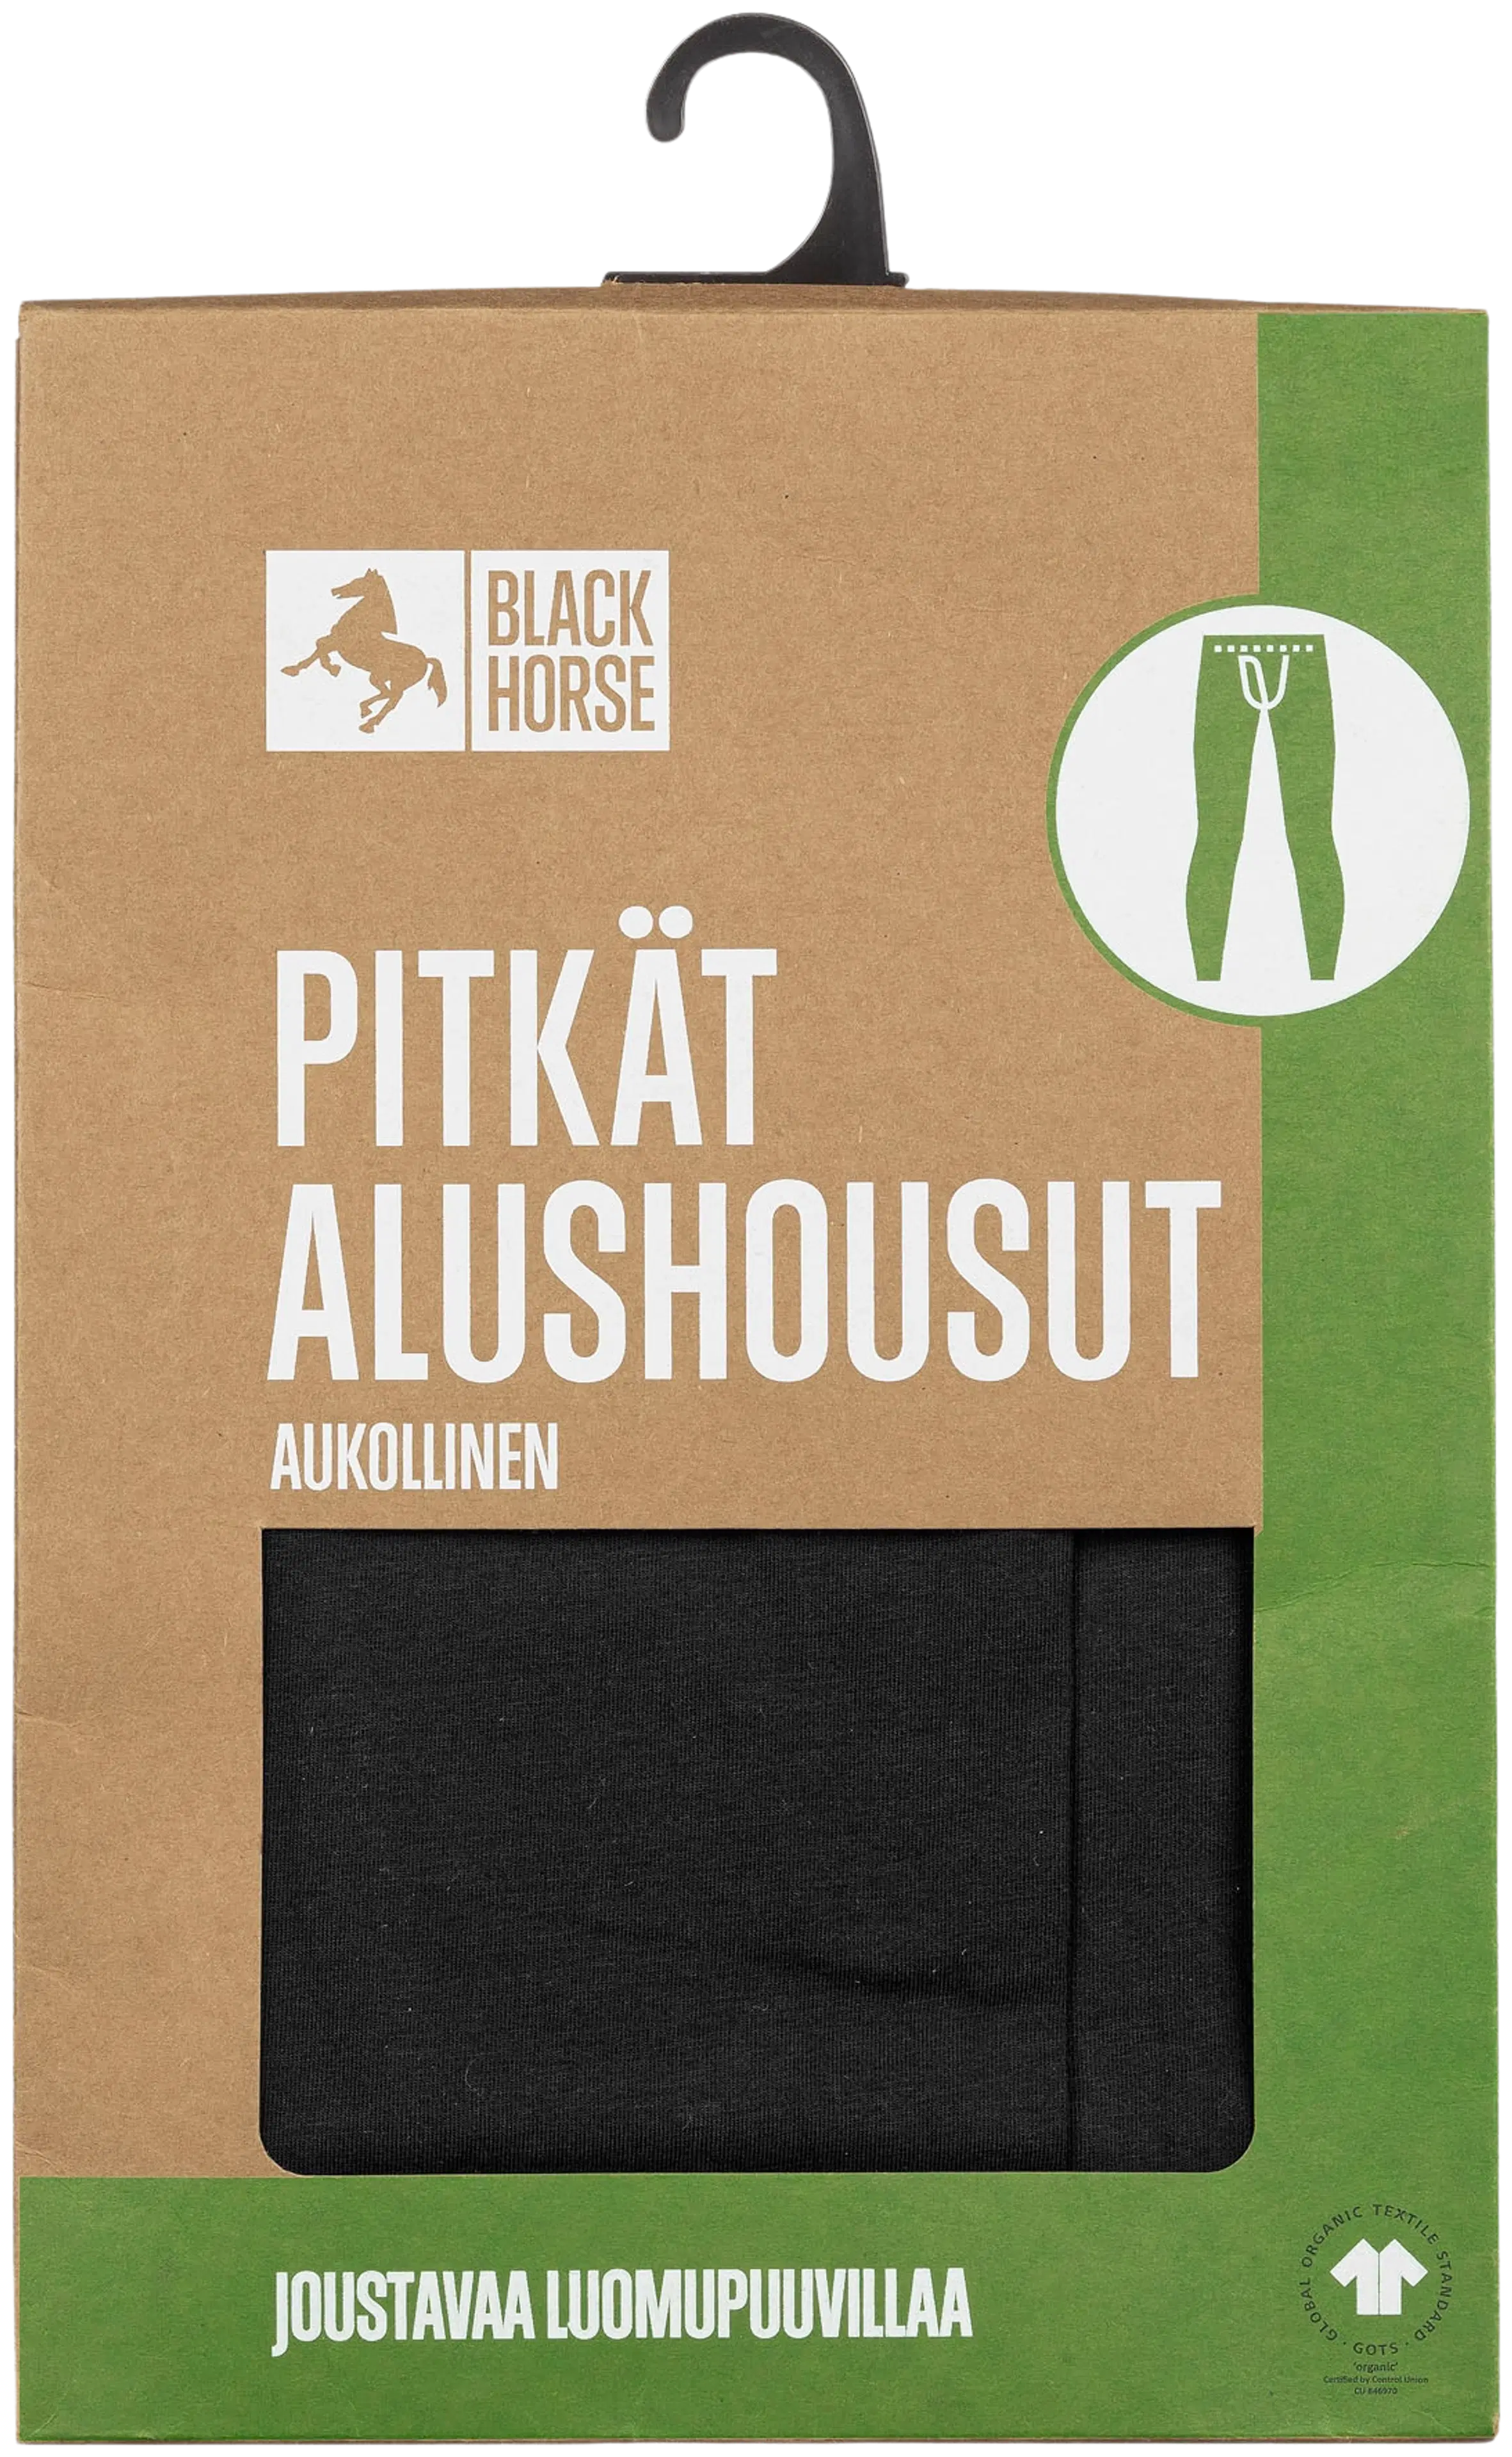 Black Horse pitkät alushousut